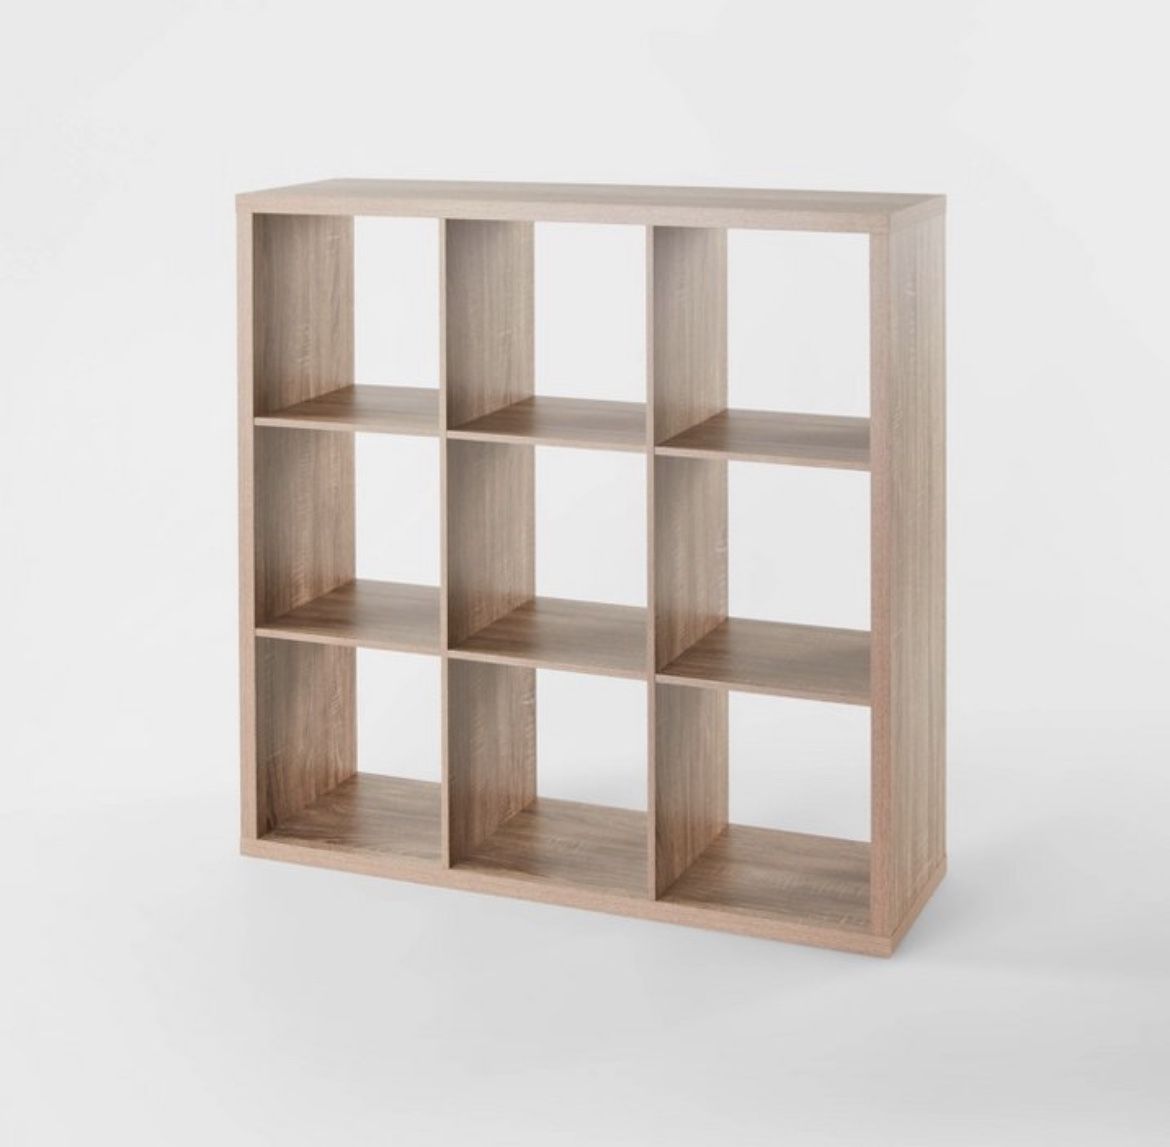 Cabinet/Shelf/ Cubed Organizer